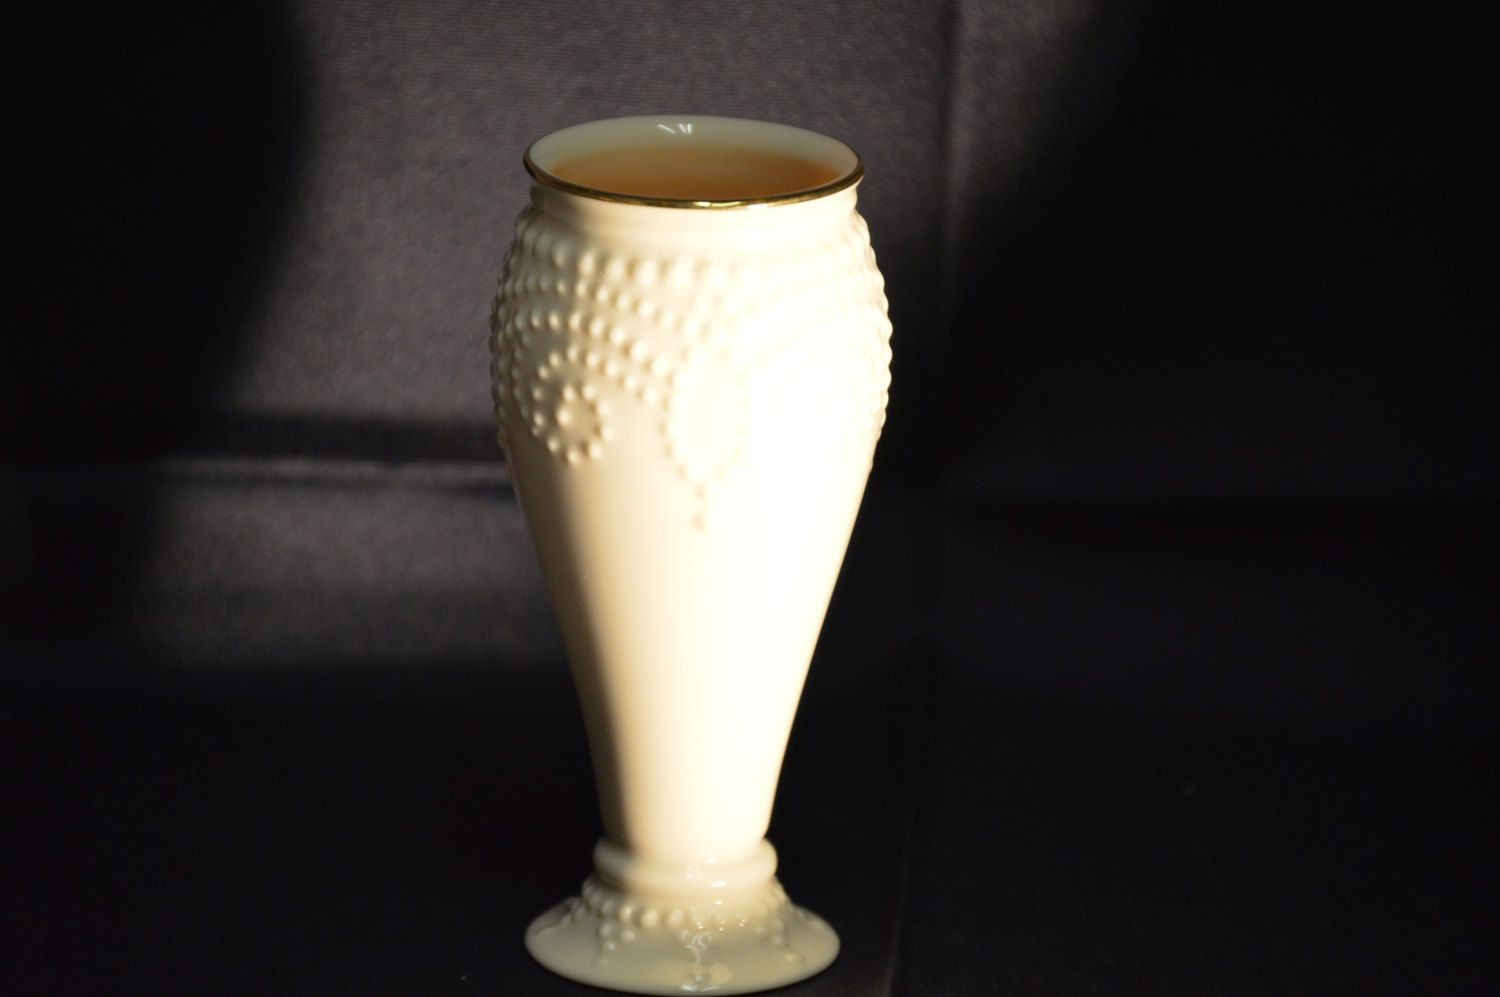 lenox crystal bud vase of lenox candle wicking pattern porcelain ivory bud vase by with lenox candle wicking pattern porcelain ivory bud vase by bigblossomantiques on etsy